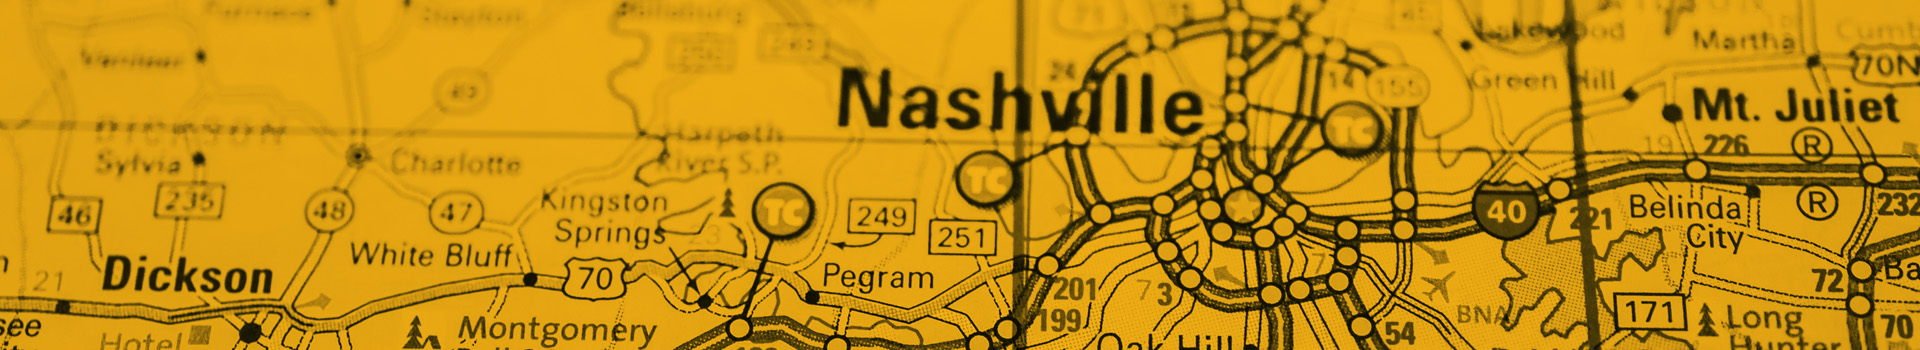 Nashville on the map